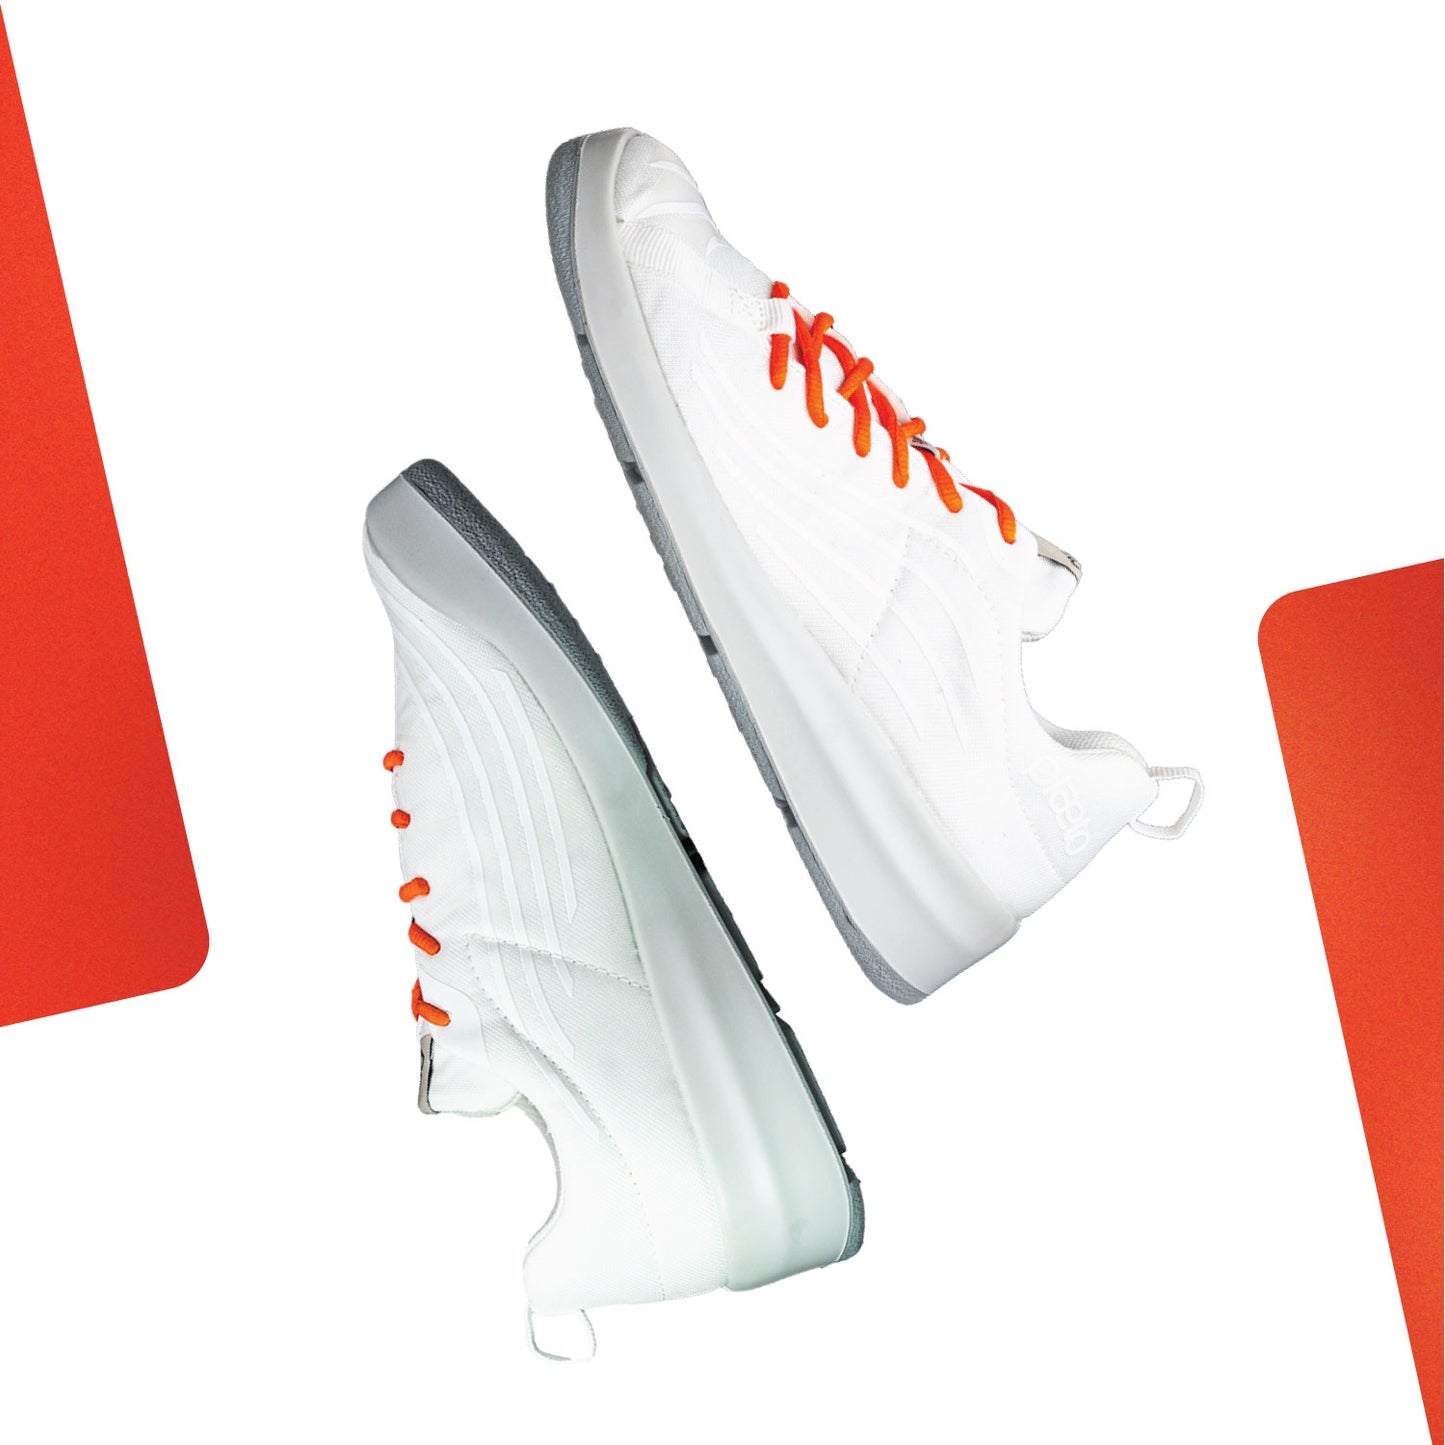 Men's Versatile Sneakers - Nova White Orange